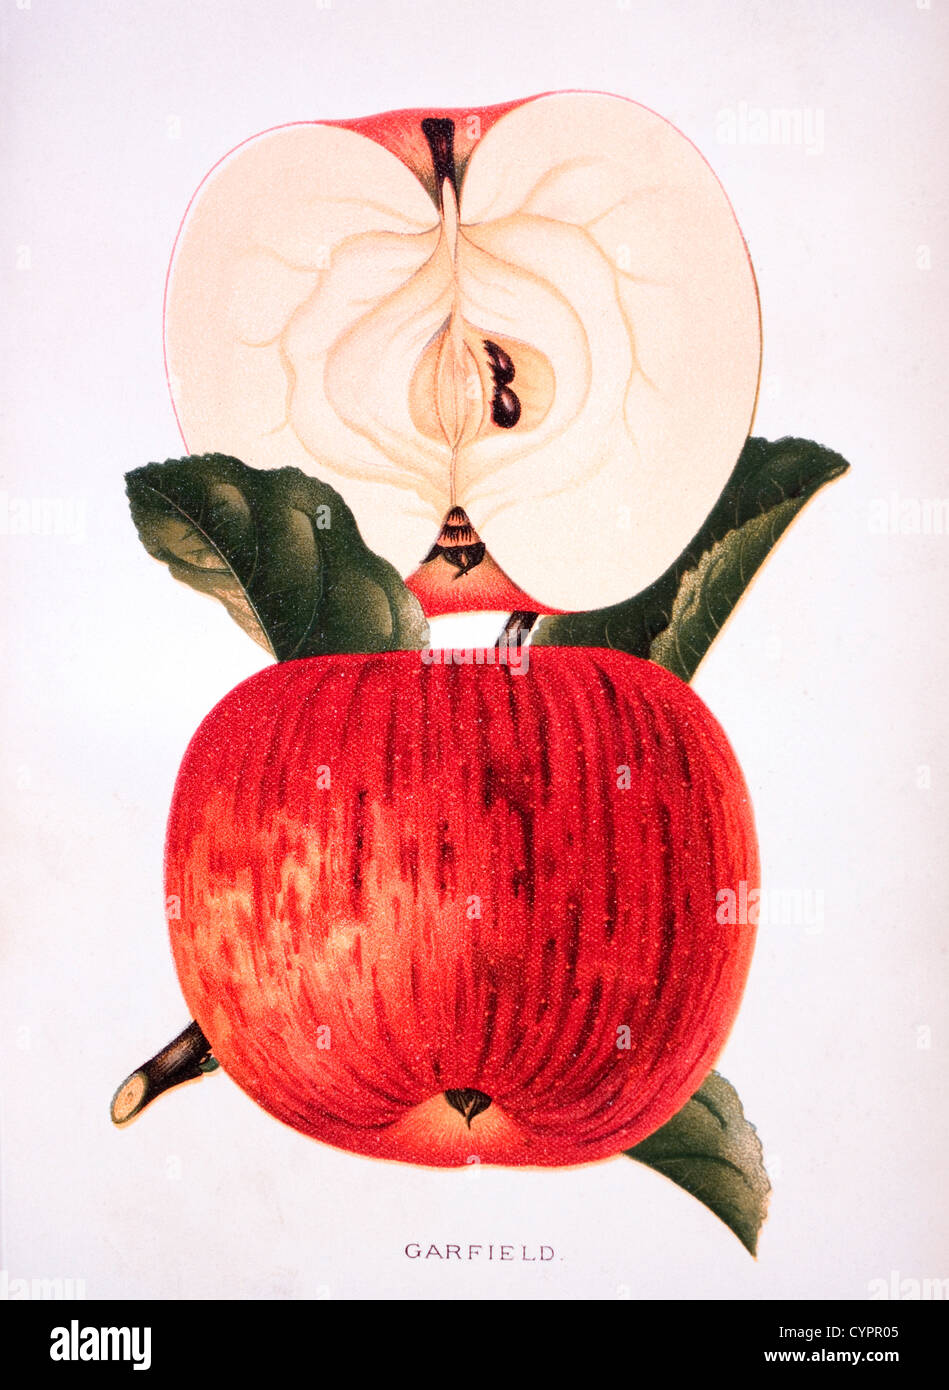 Garfield Apple, Lithograph, 1889 Stock Photo